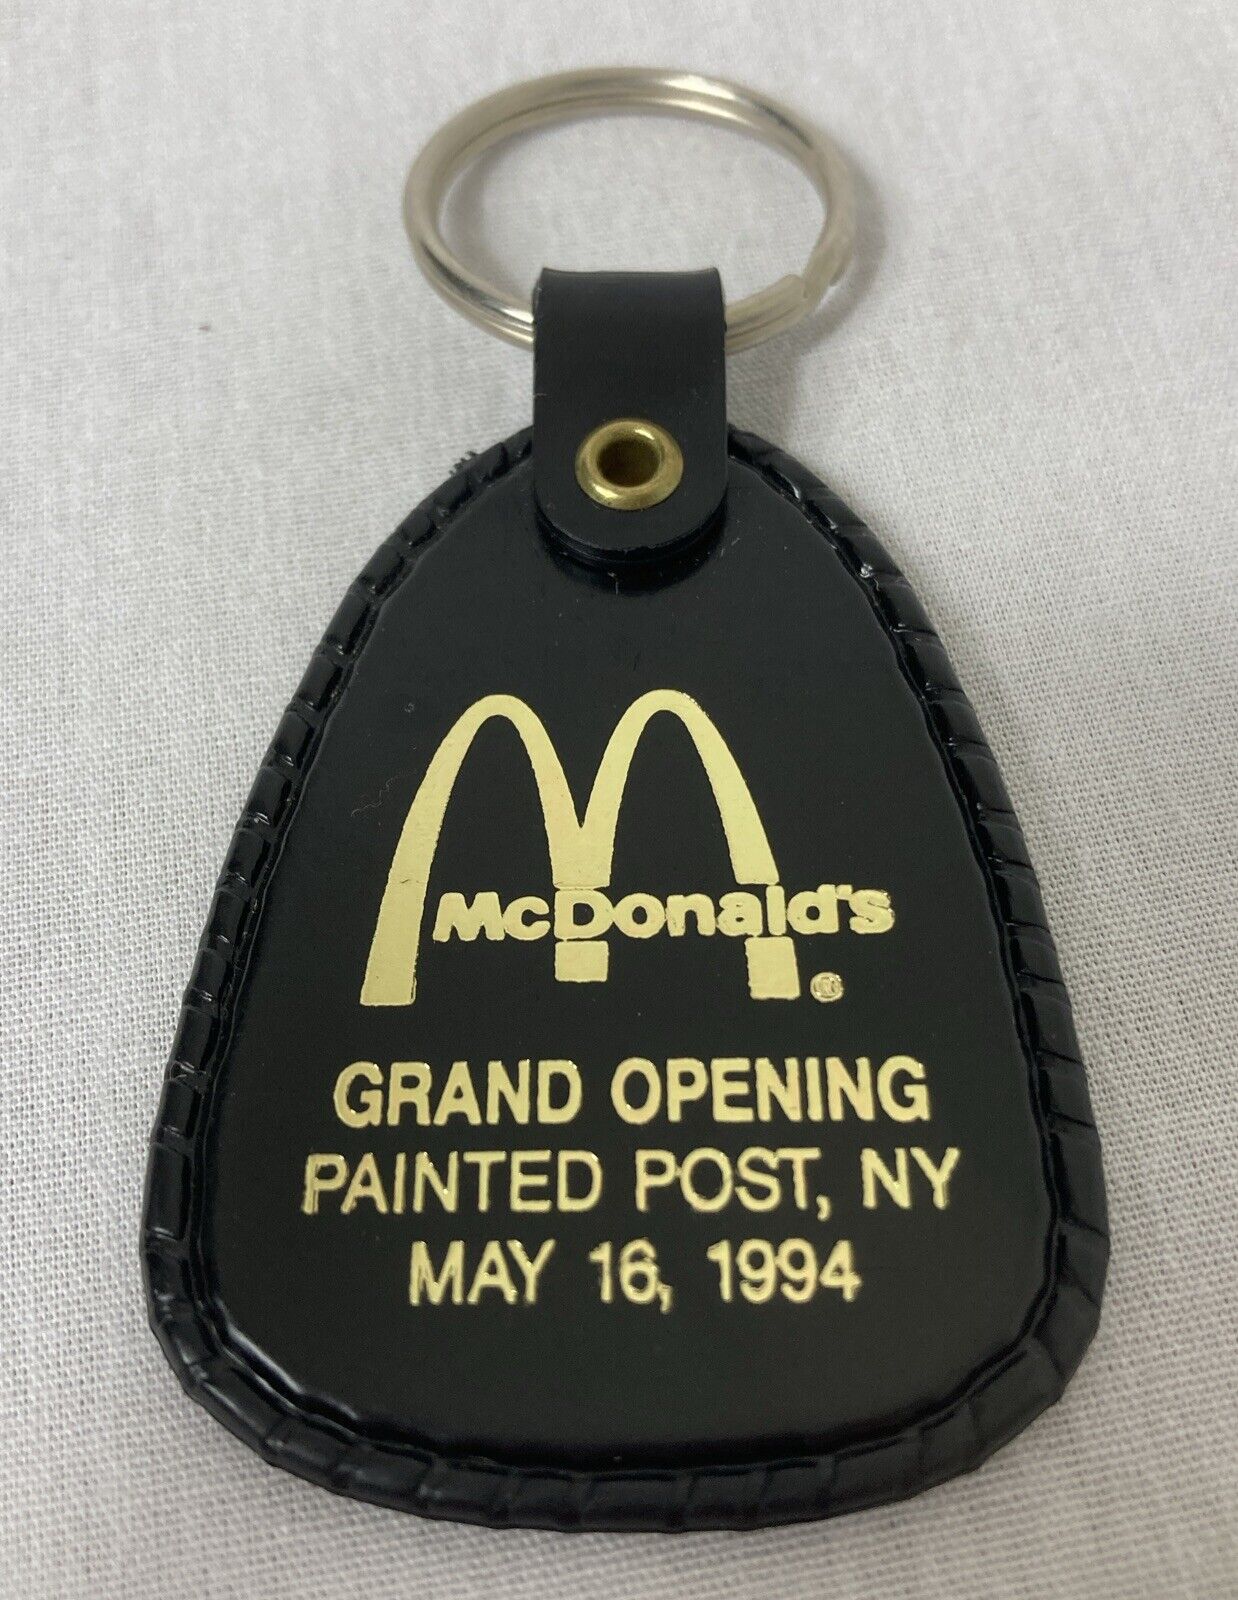 VTG McDonalds Promotional 1994 Grand Opening Painted Post NY Plastic Keychain 3”